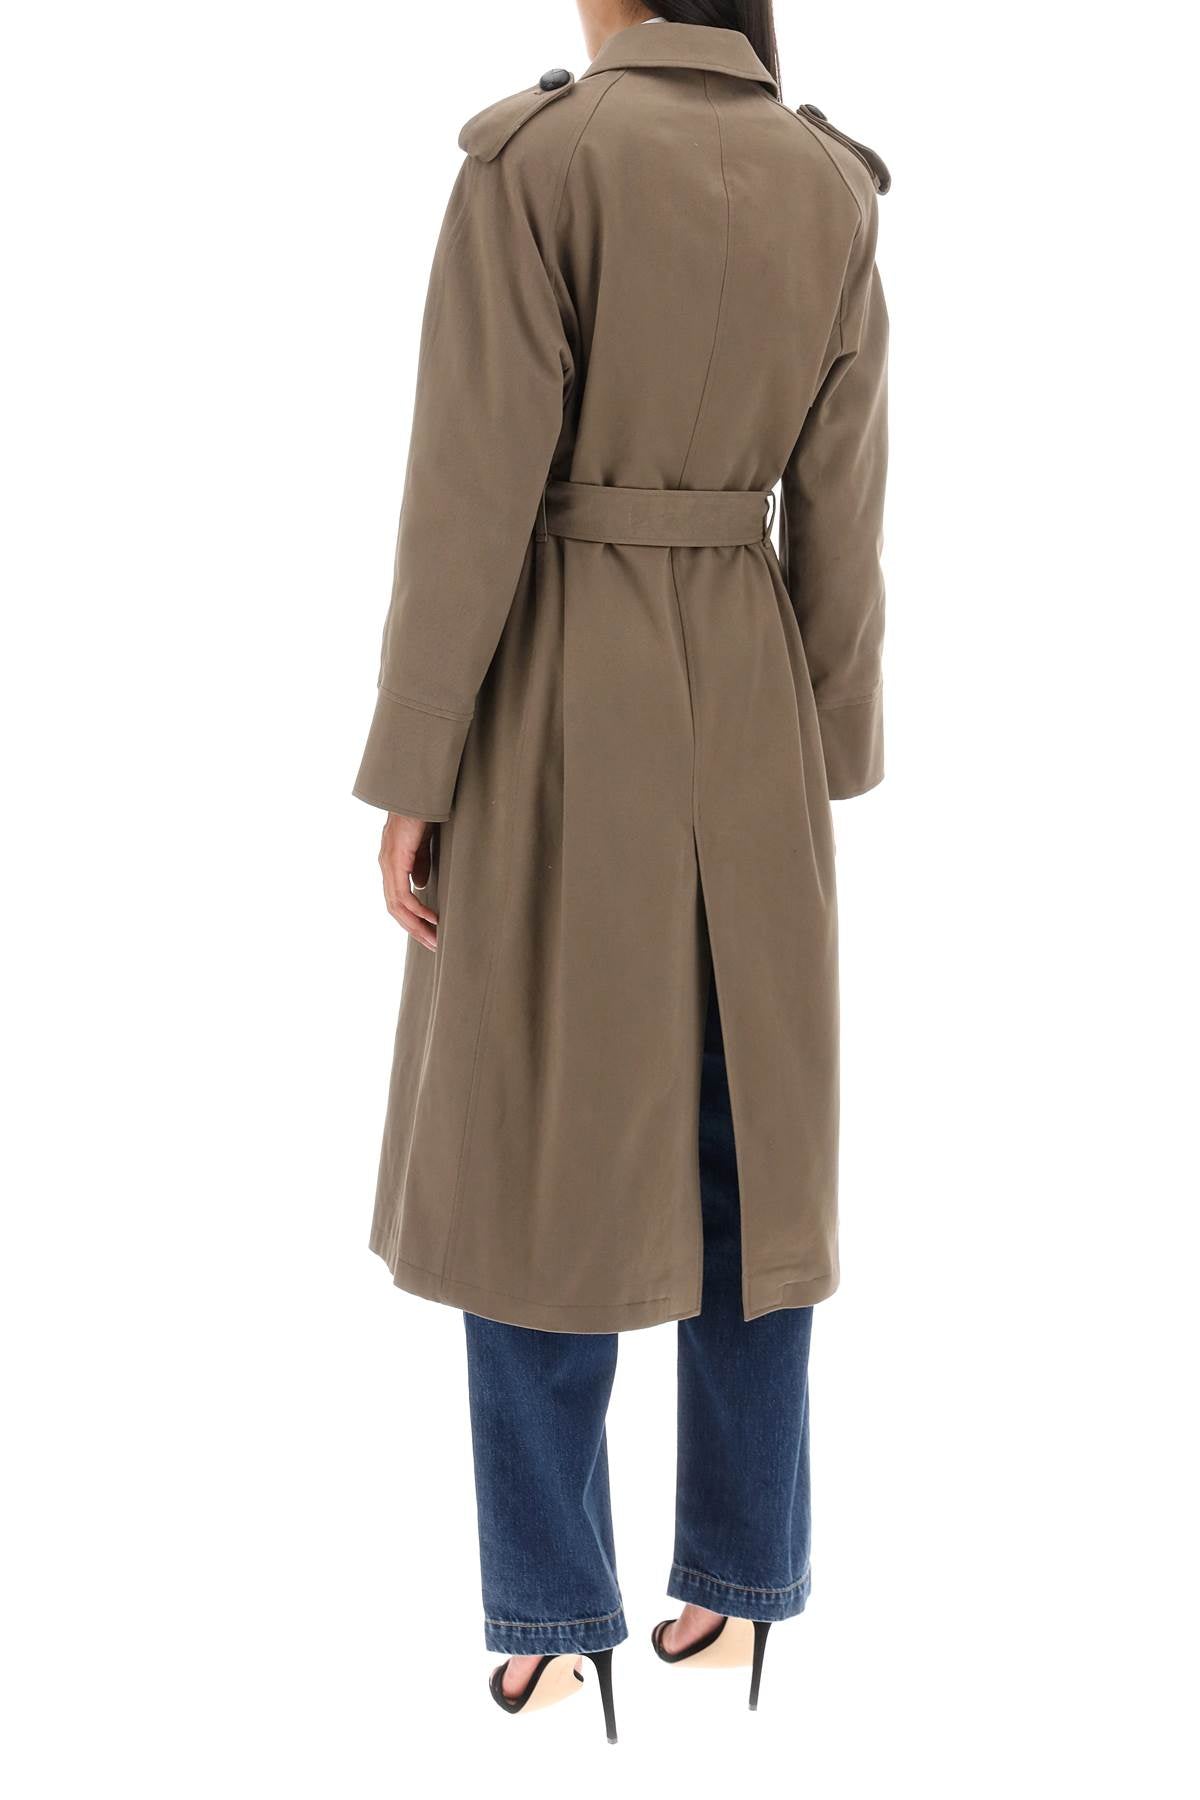 Mvp wardrobe 'bigli' cotton double-breasted trench coat-2